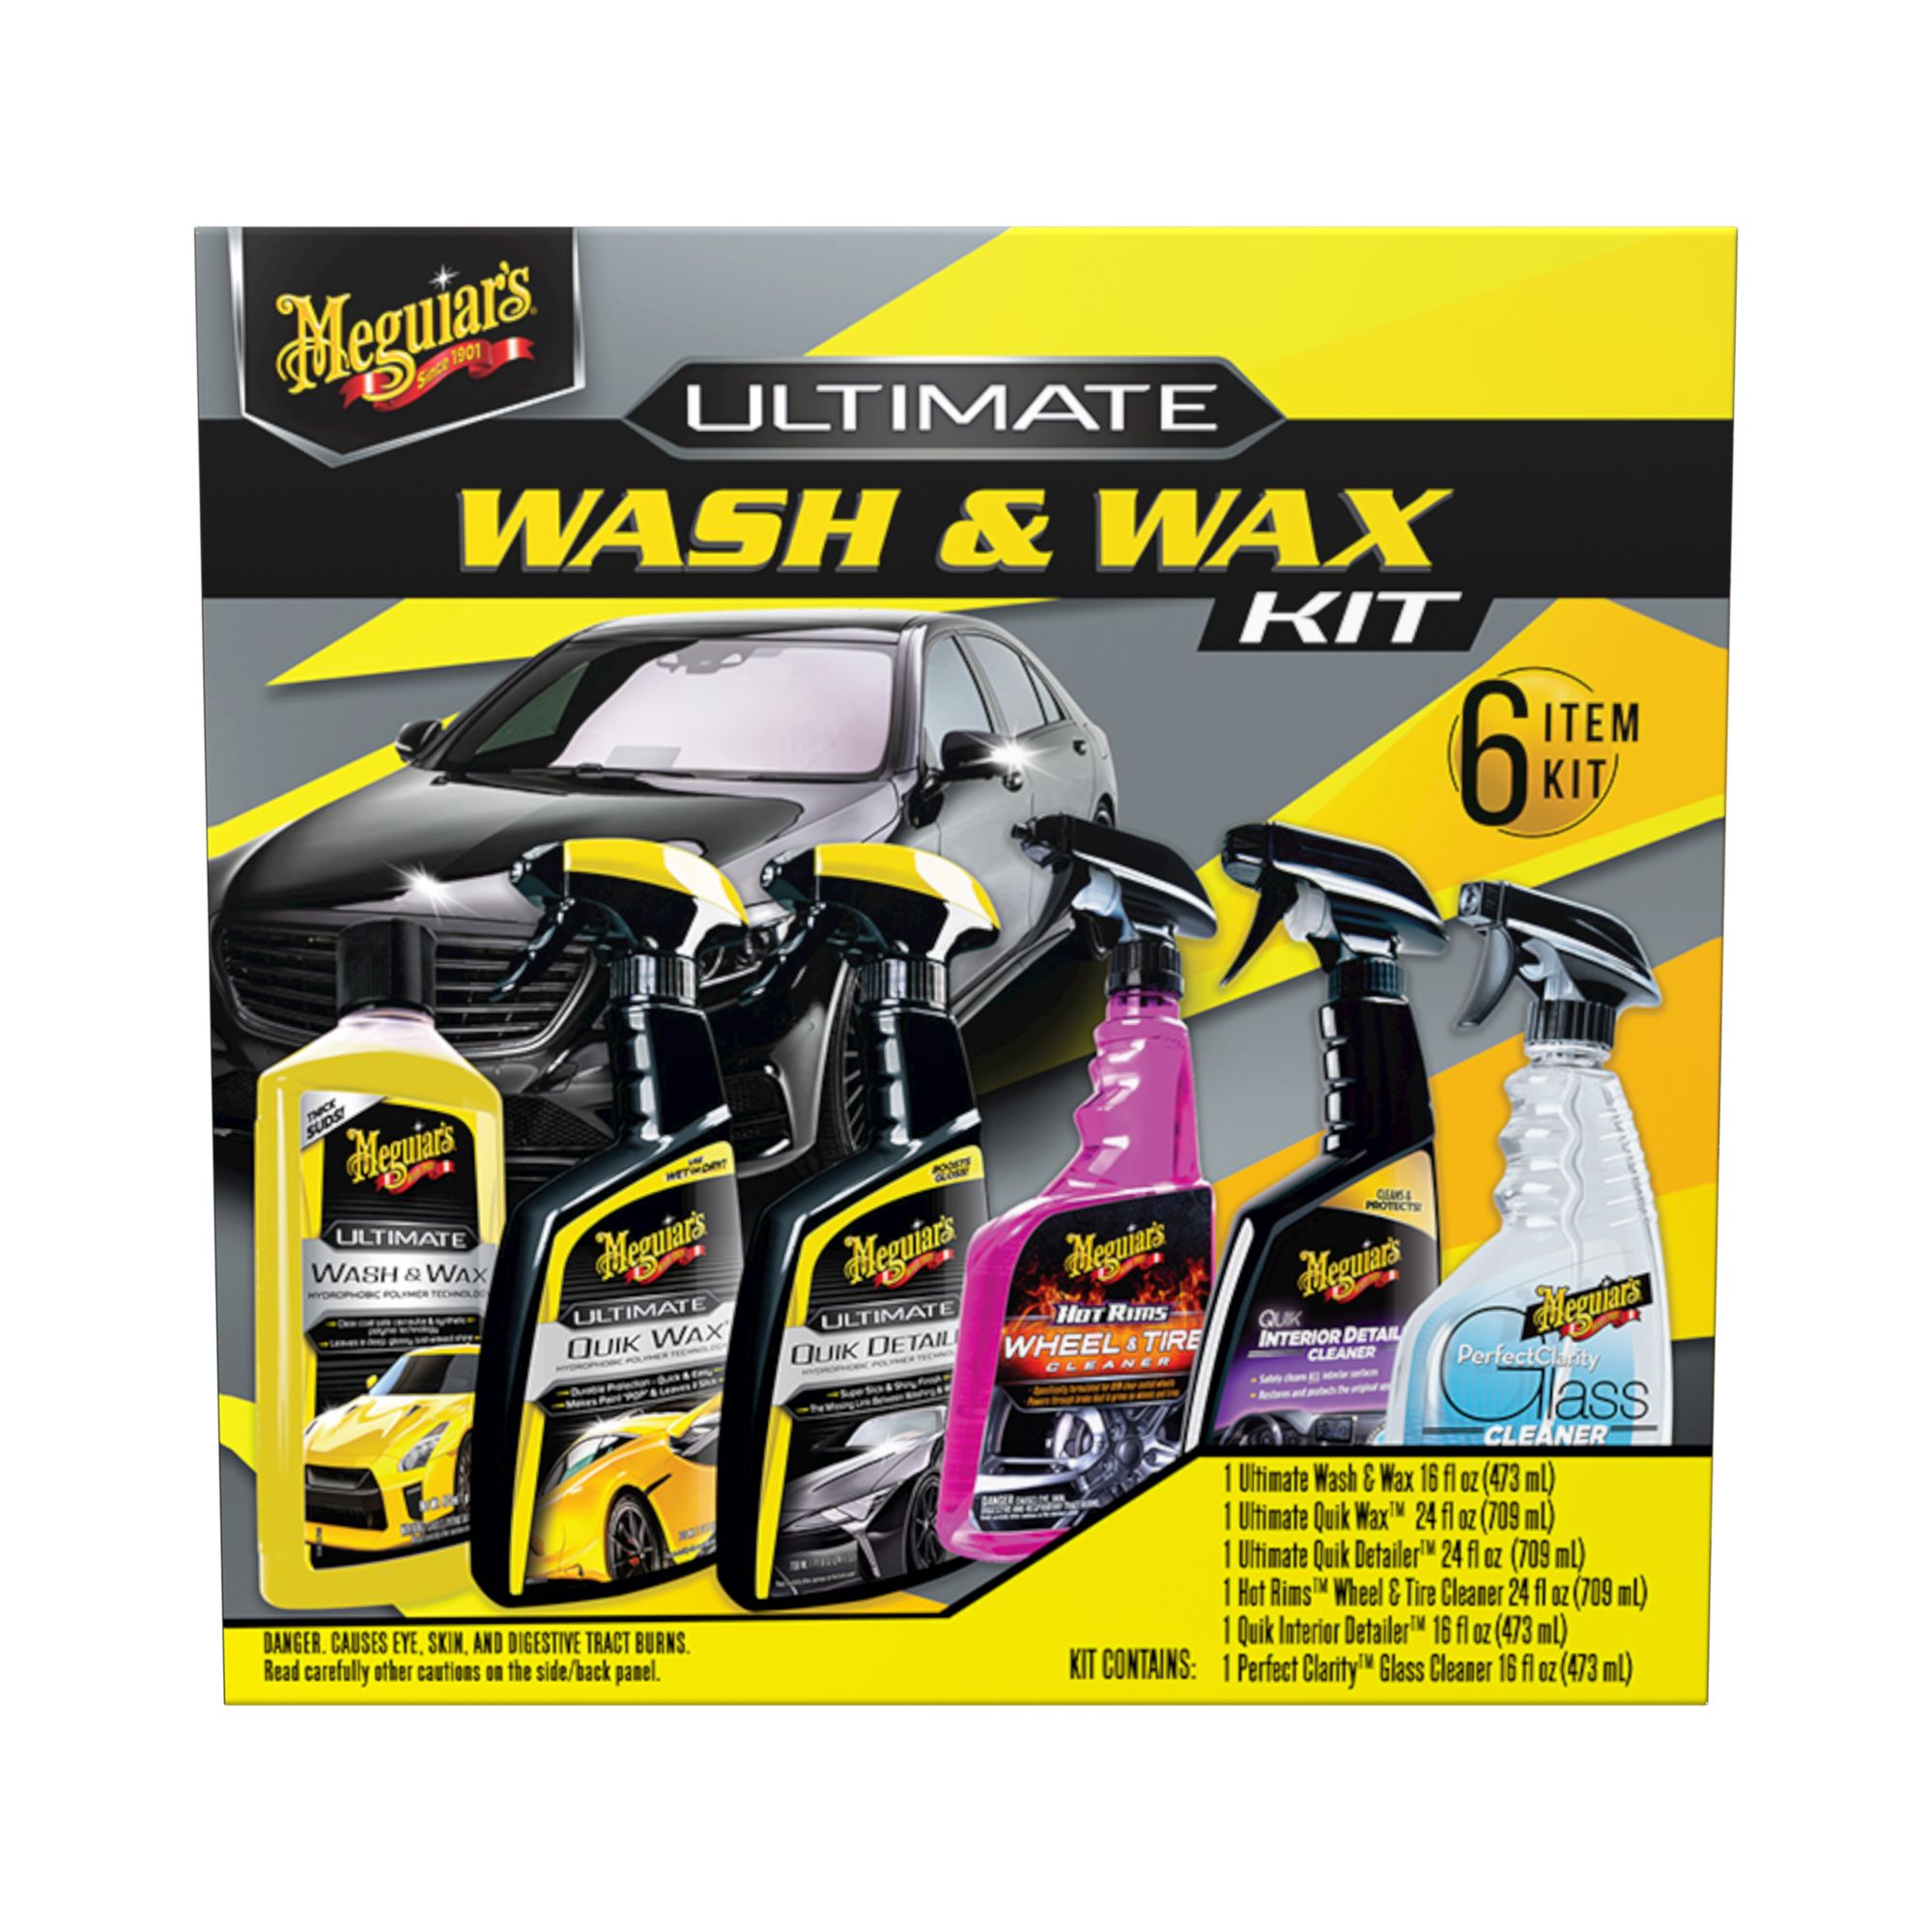 Chemical Guys Premium 10 pc. Complete Car Care Kit